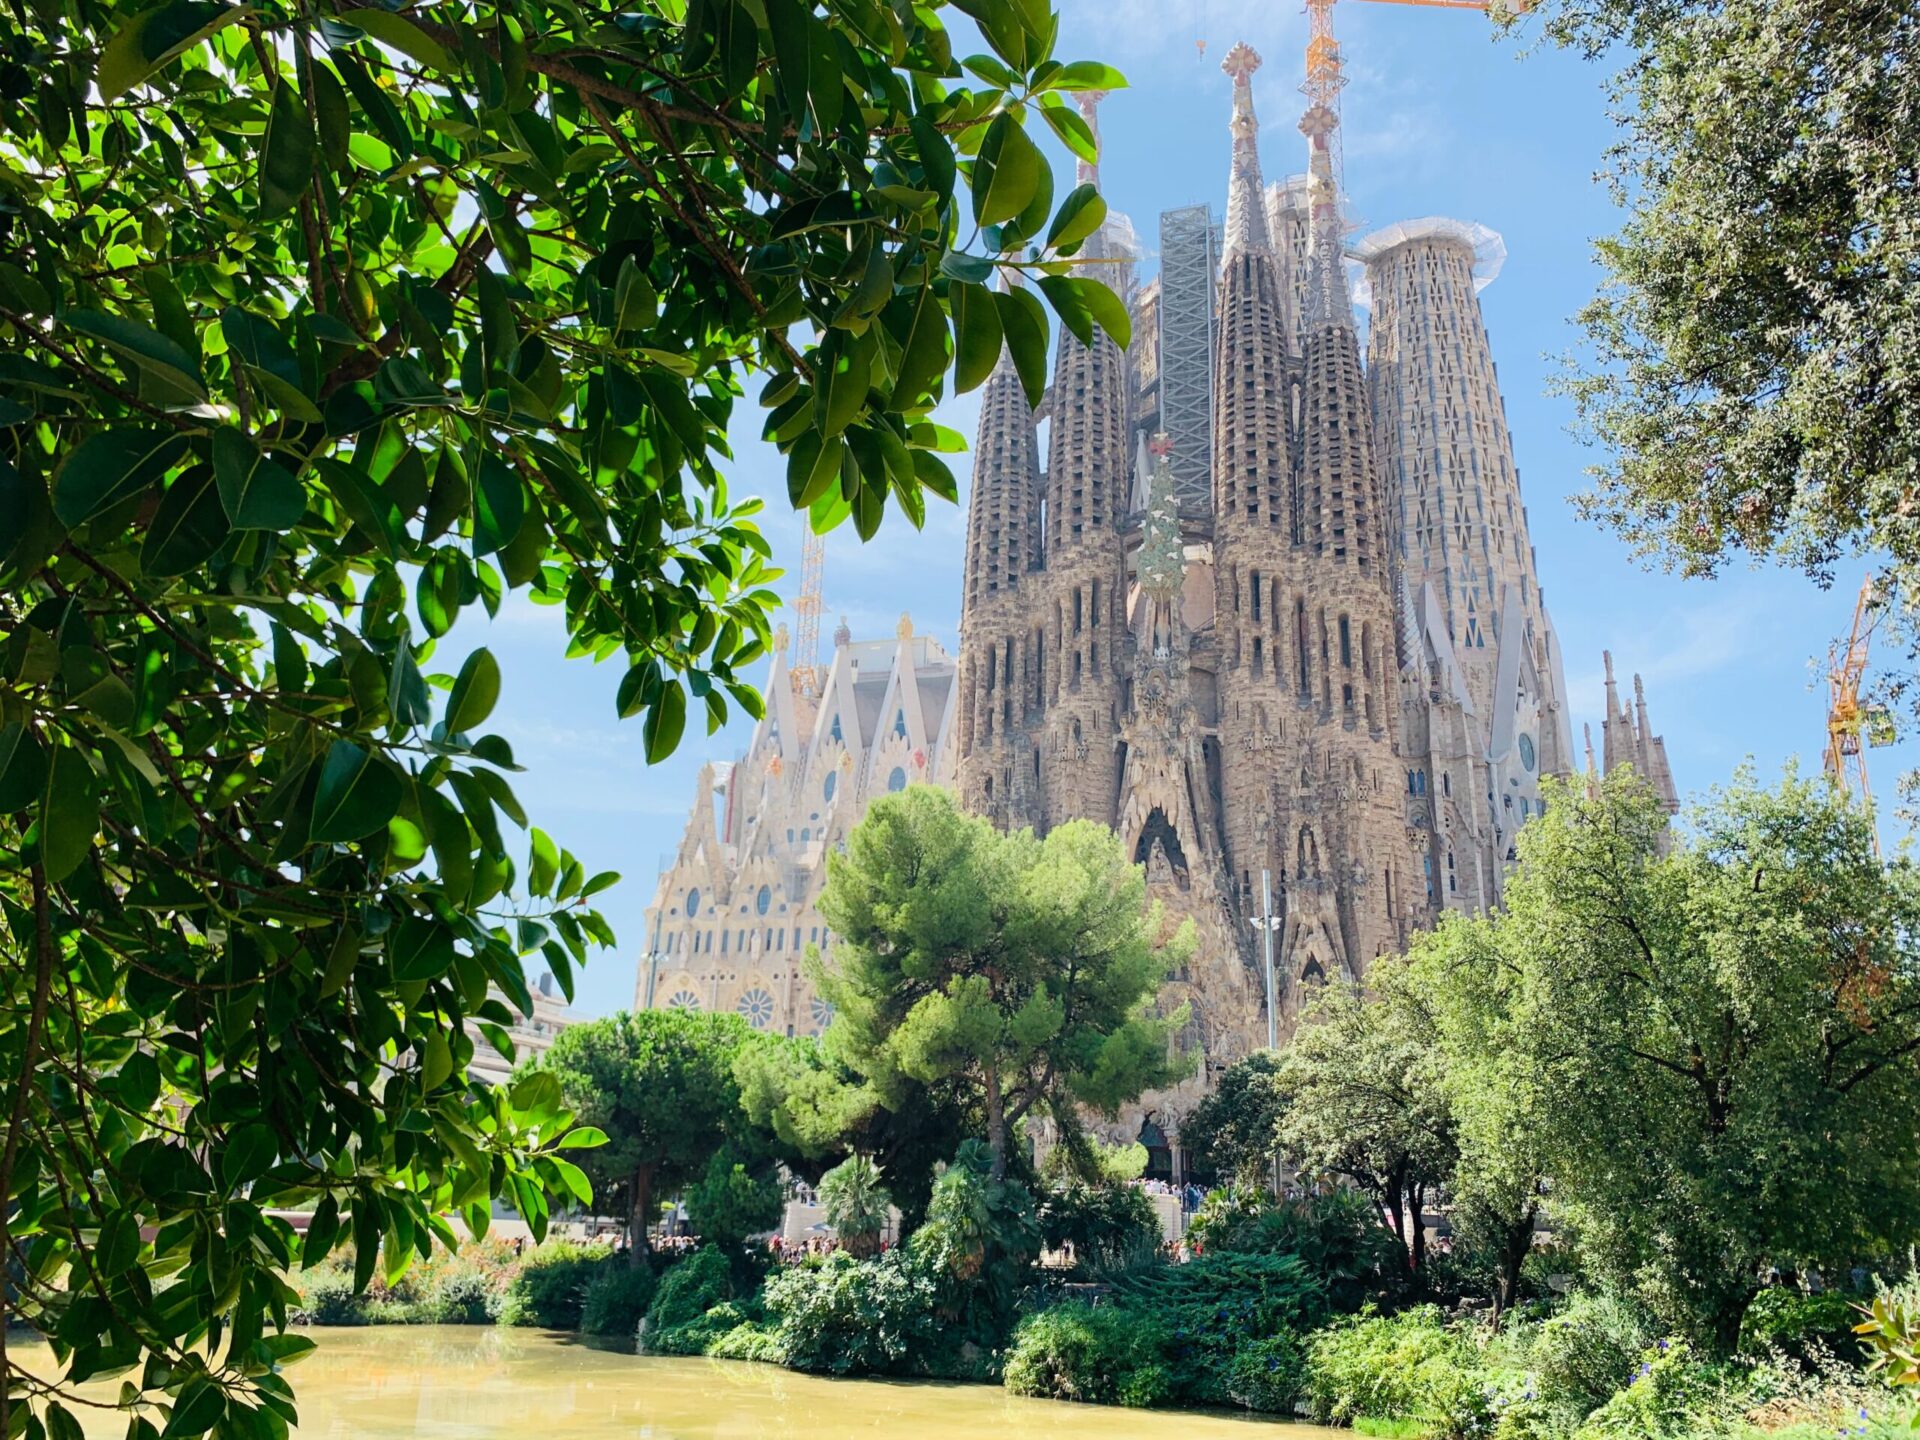 Sagrada Familia and Pedrera with Glass of Cava and Tapa